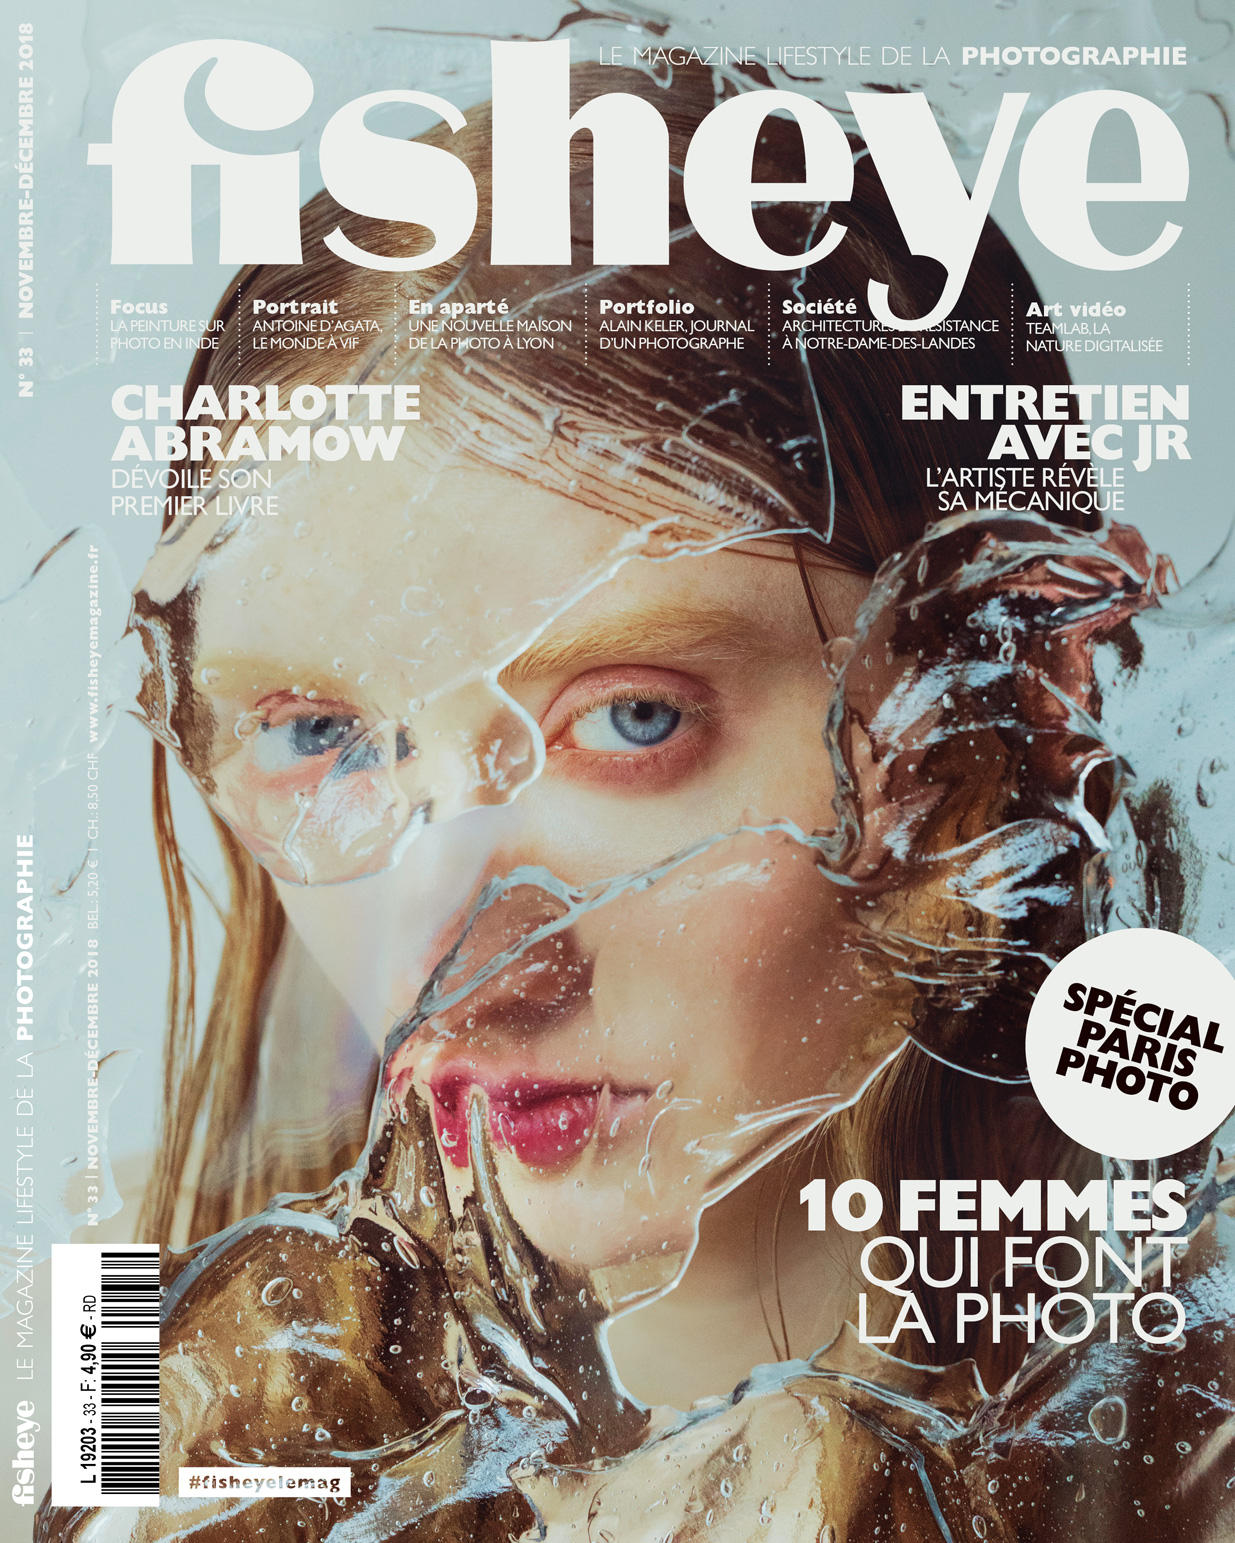 fisheye magazine n°33 Zenitudeprofondelemag.com